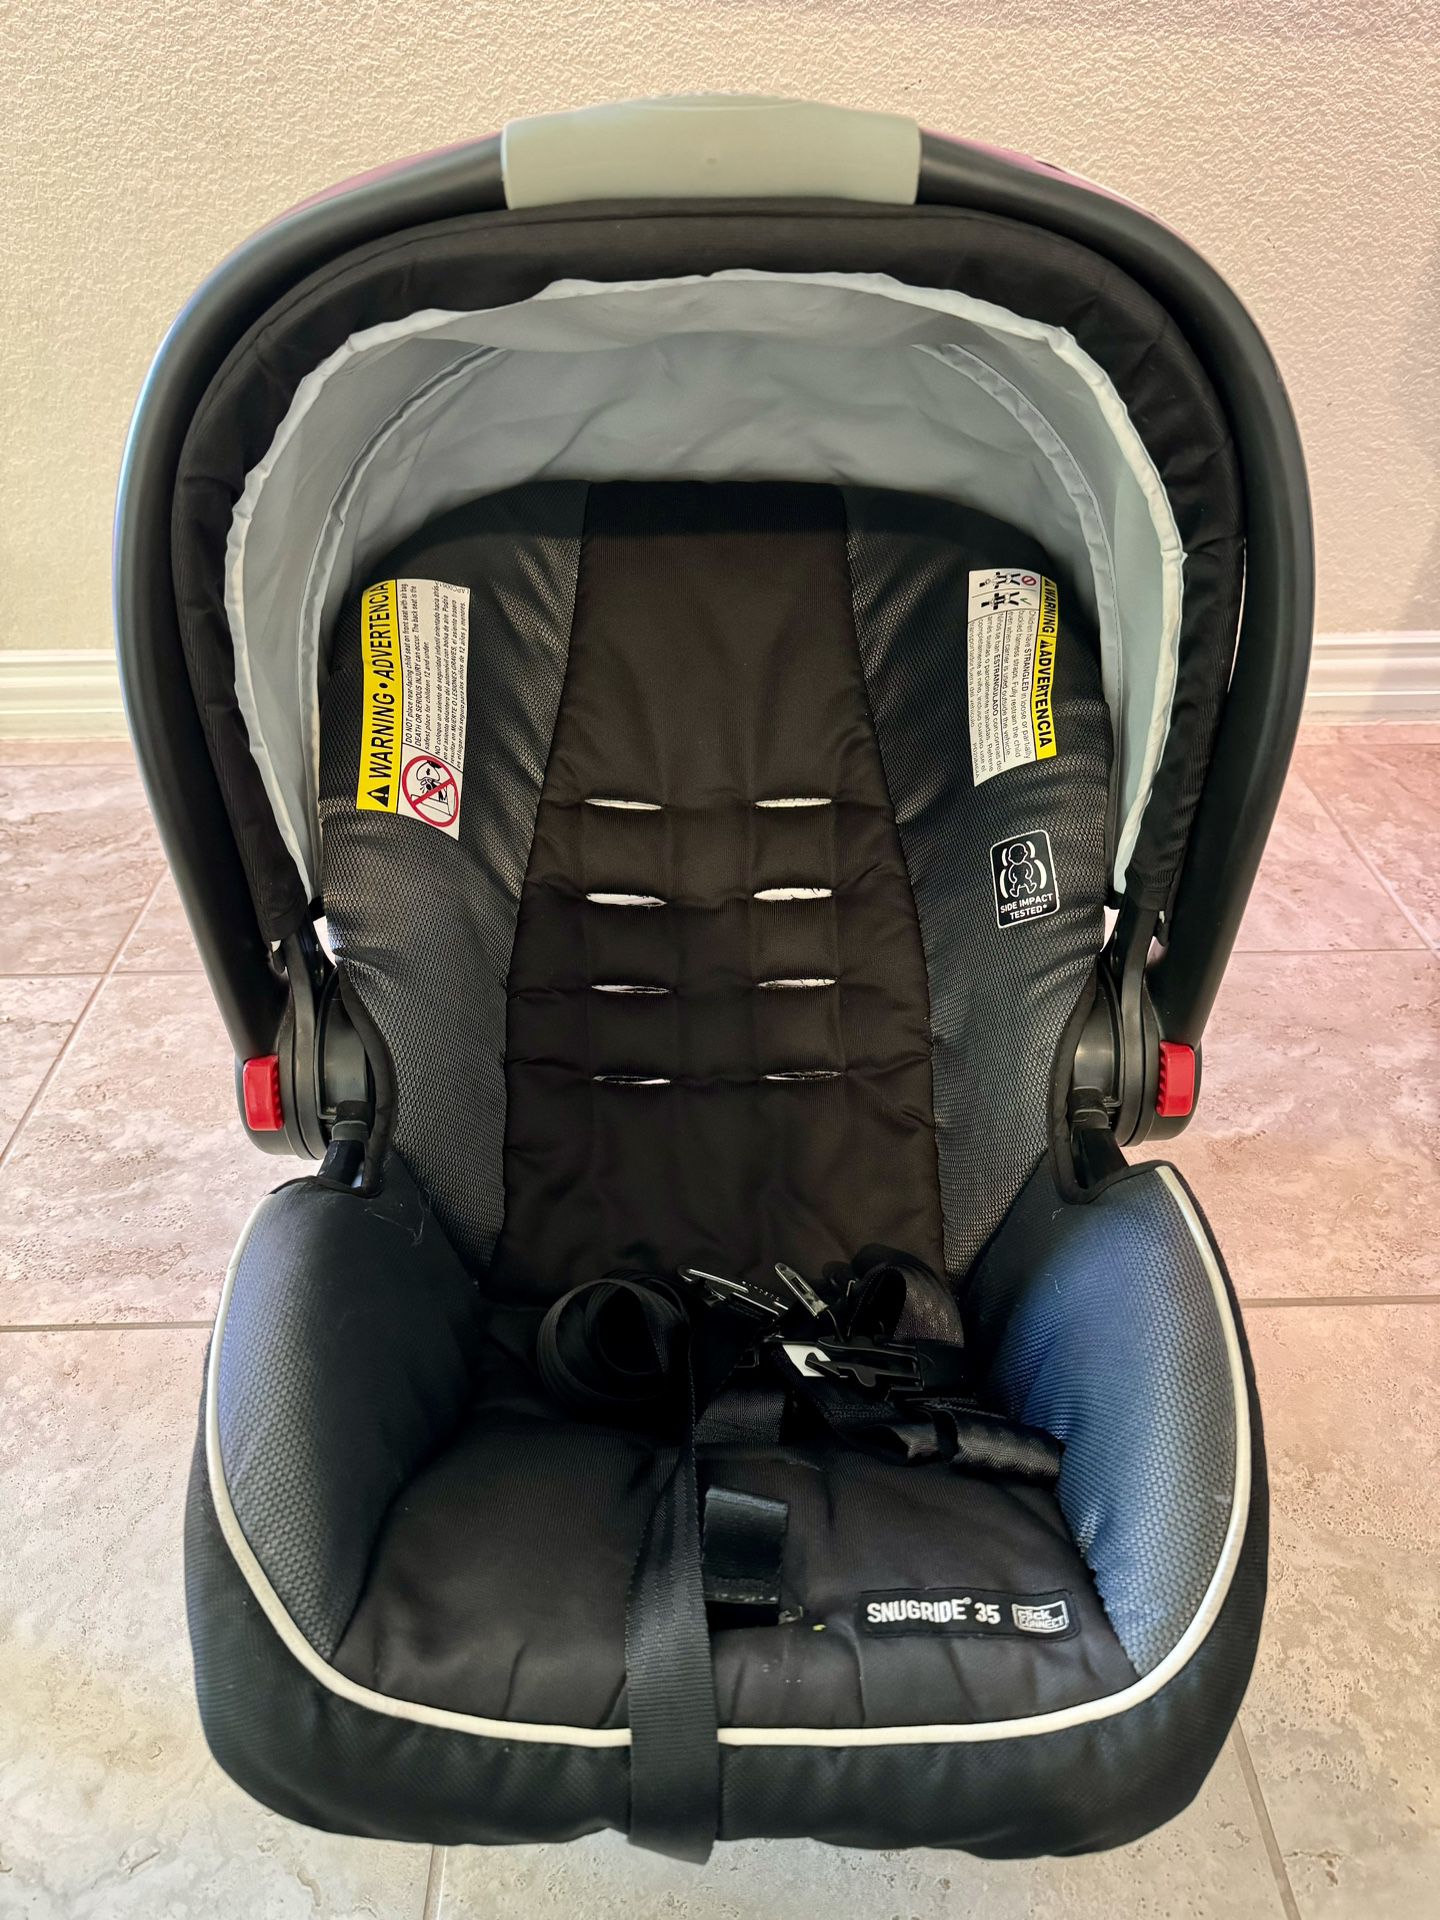 Graco SnugRide 35 Click Connect Baby Infant Car Seat - Grapeade | 1852555